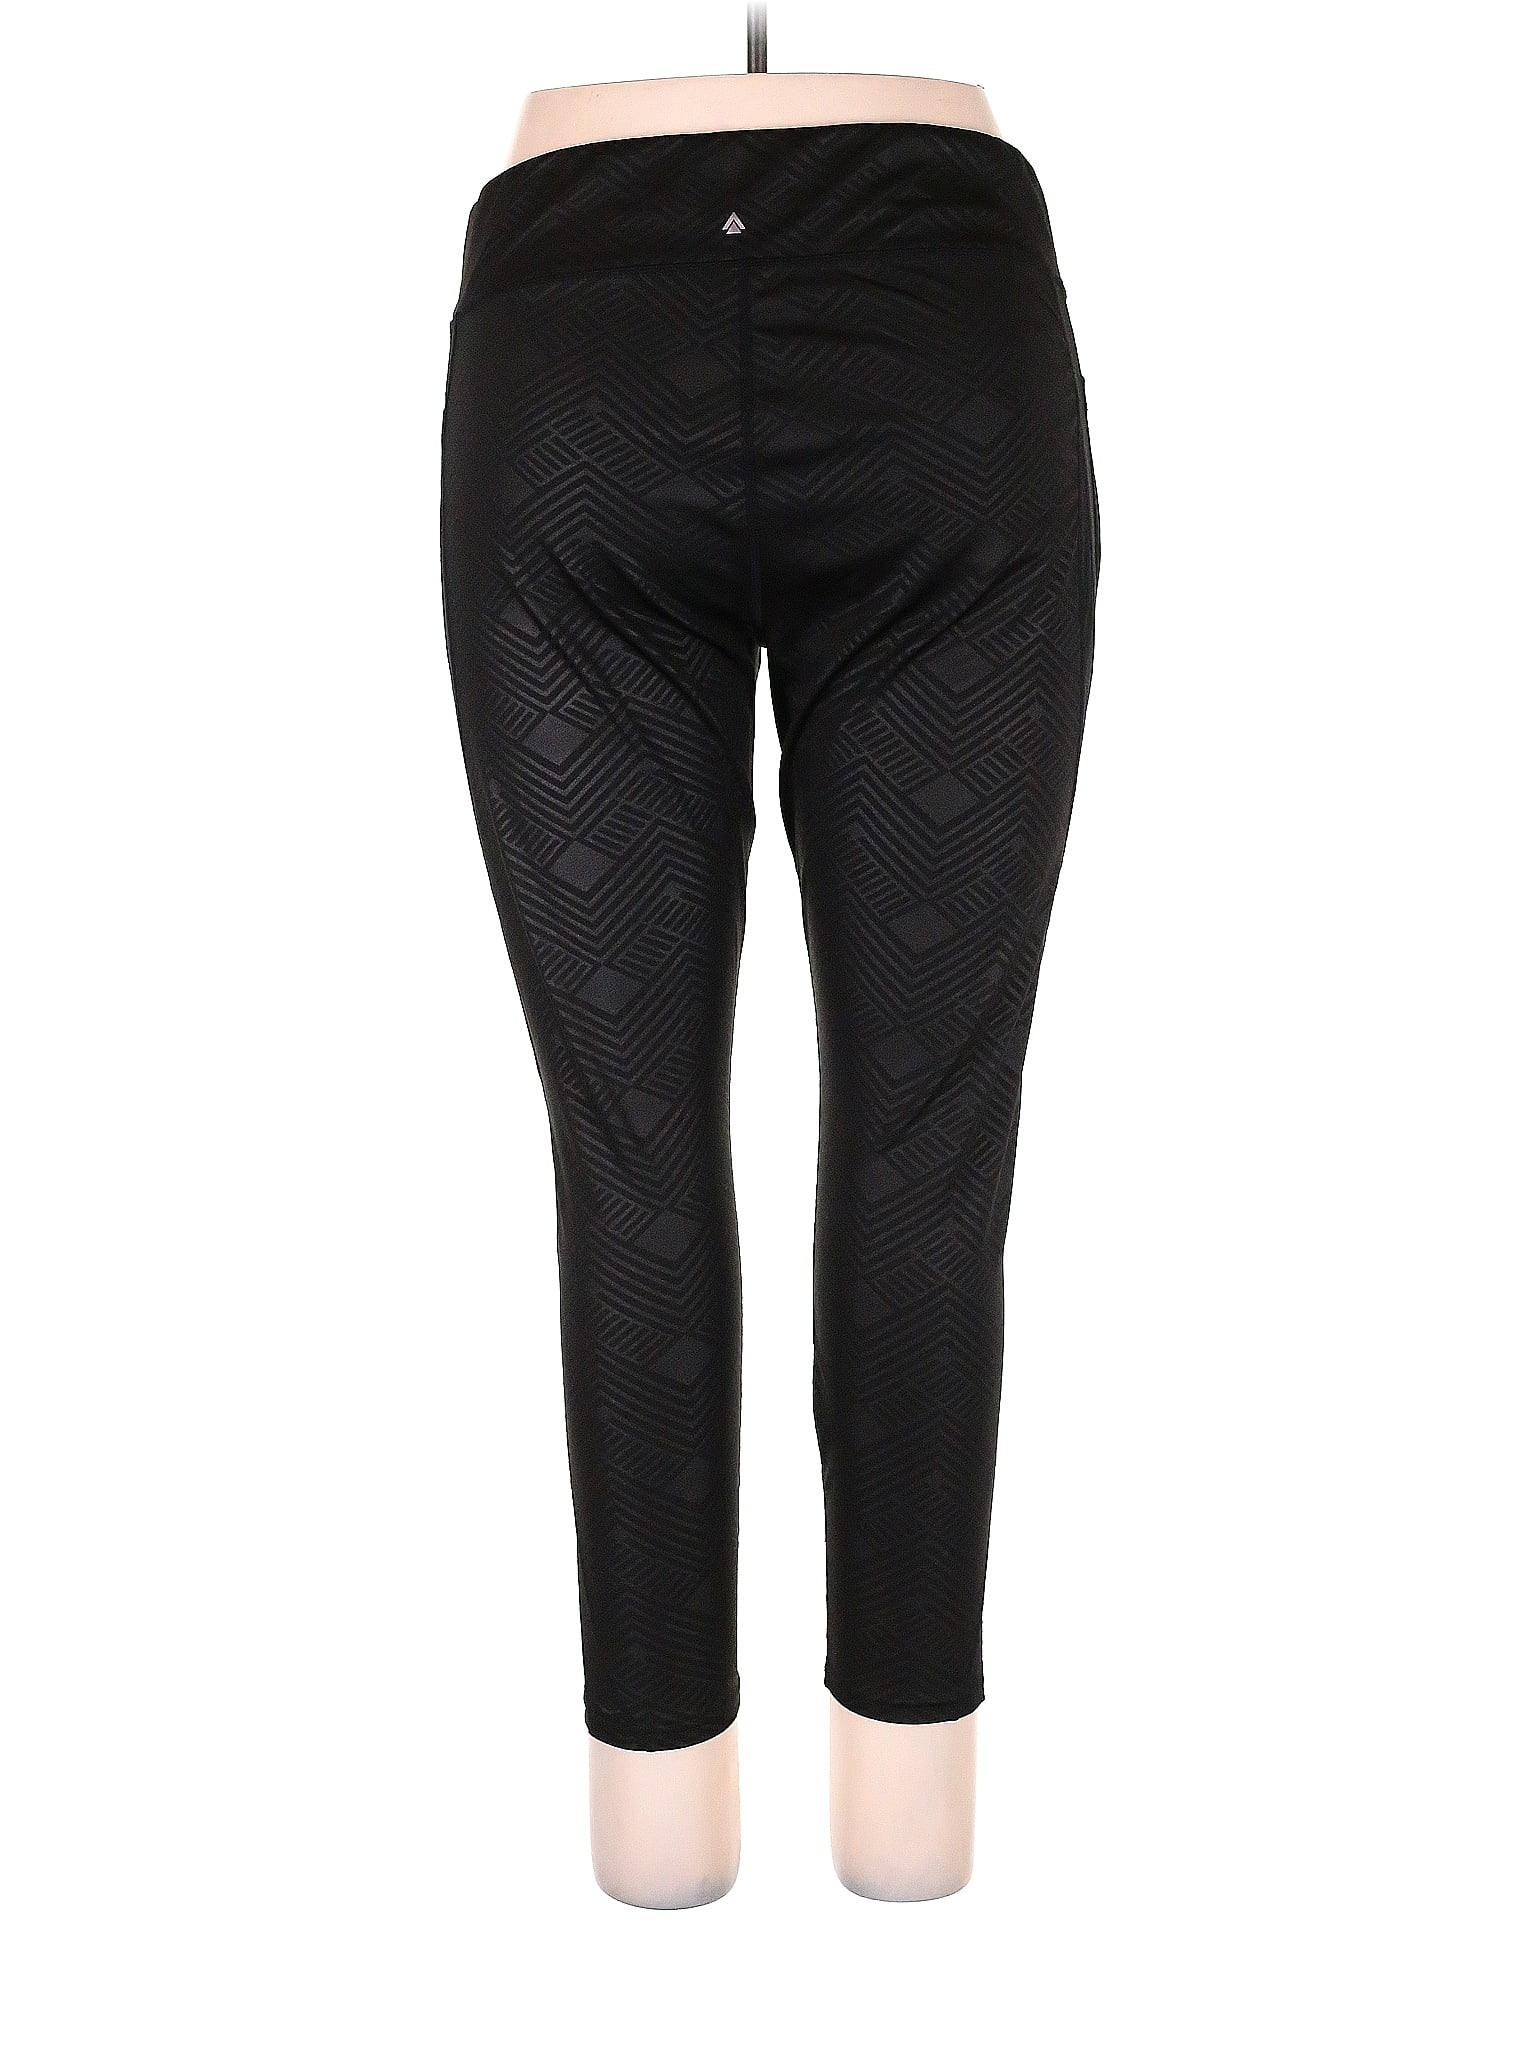 JoyLab Black Casual Pants Size 2X (Plus) - 40% off